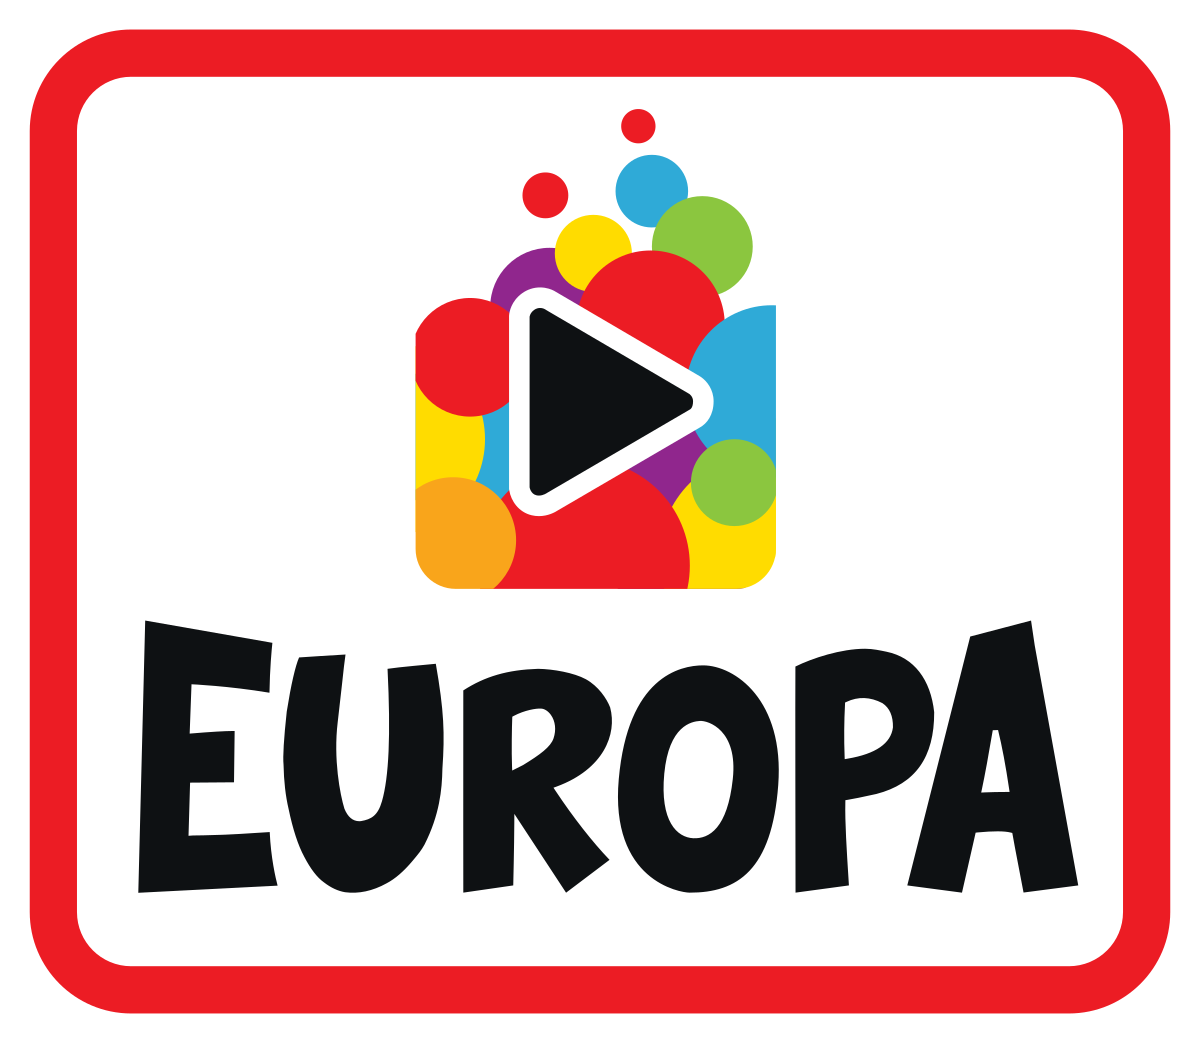 Europa (Label) – Wikipedia